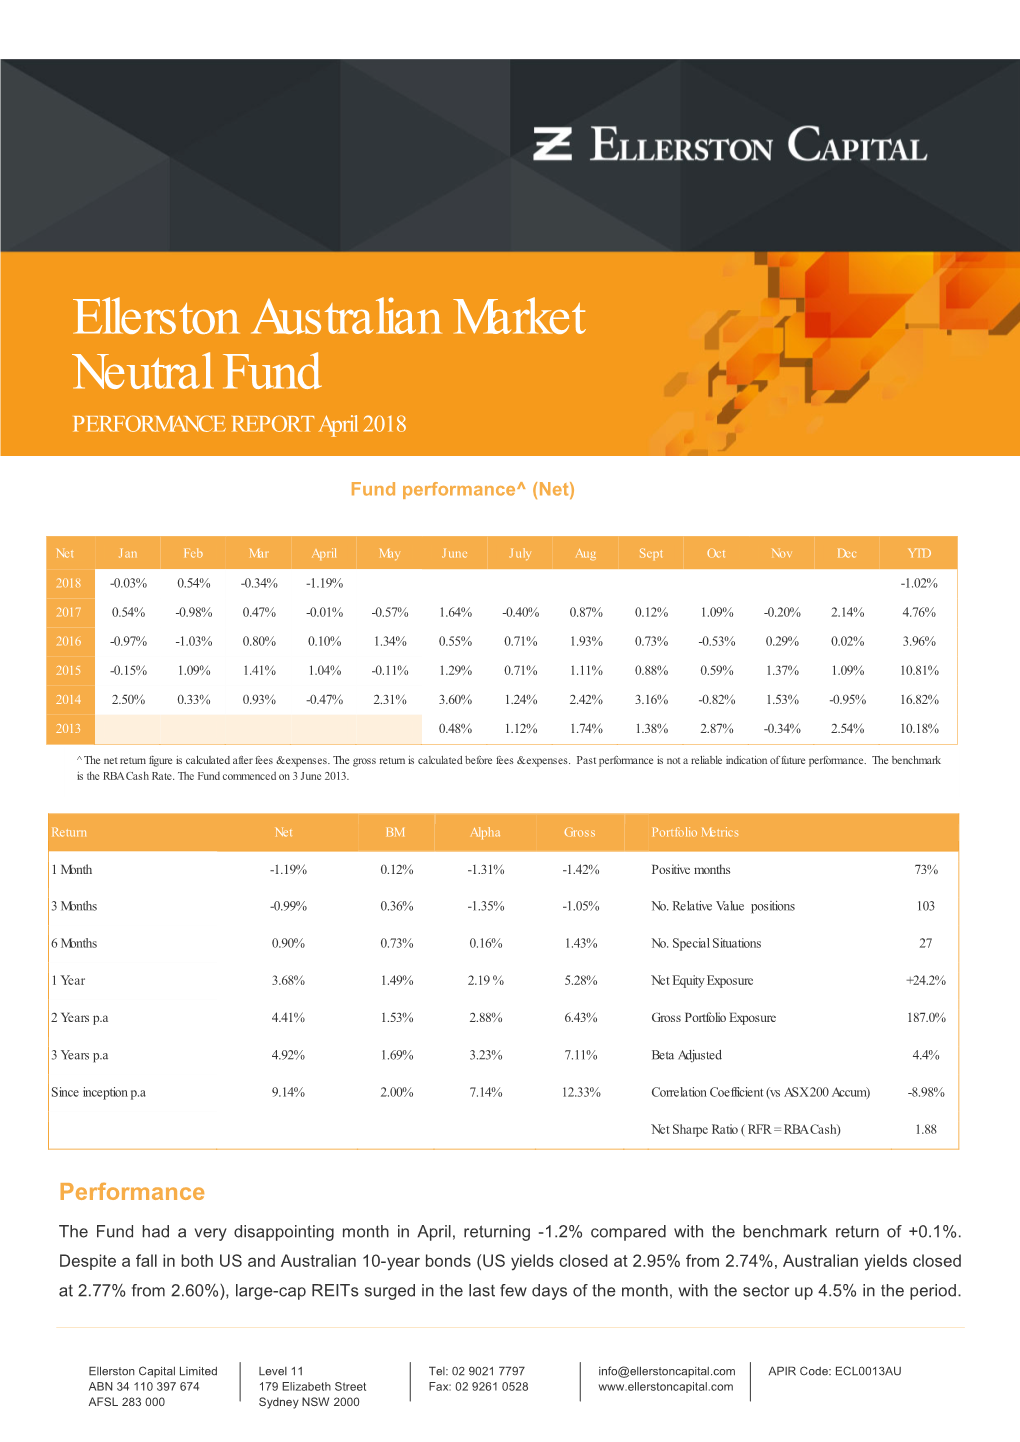 Ellerston Australian Market Neutral Fund PERFORMANCE REPORT April 2018